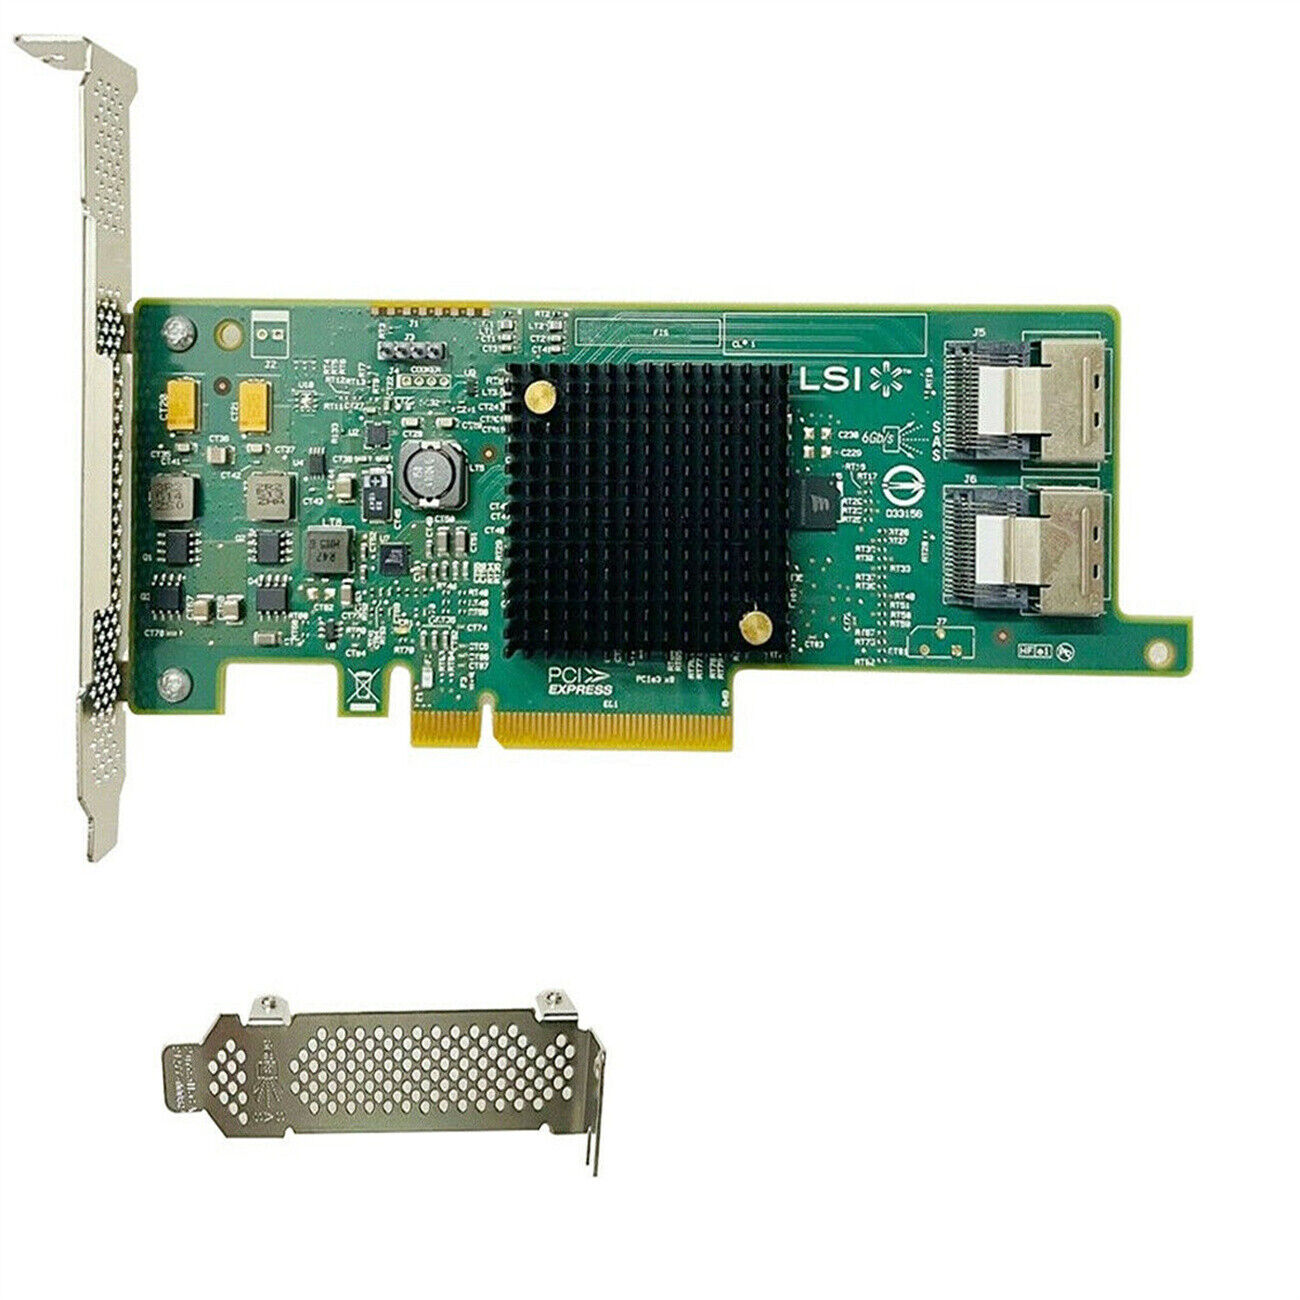 New LSI 9207-8i 6Gbs SAS 2308 PCI-E 3.0 HBA IT Mode For ZFS FreeNAS unRAID Card